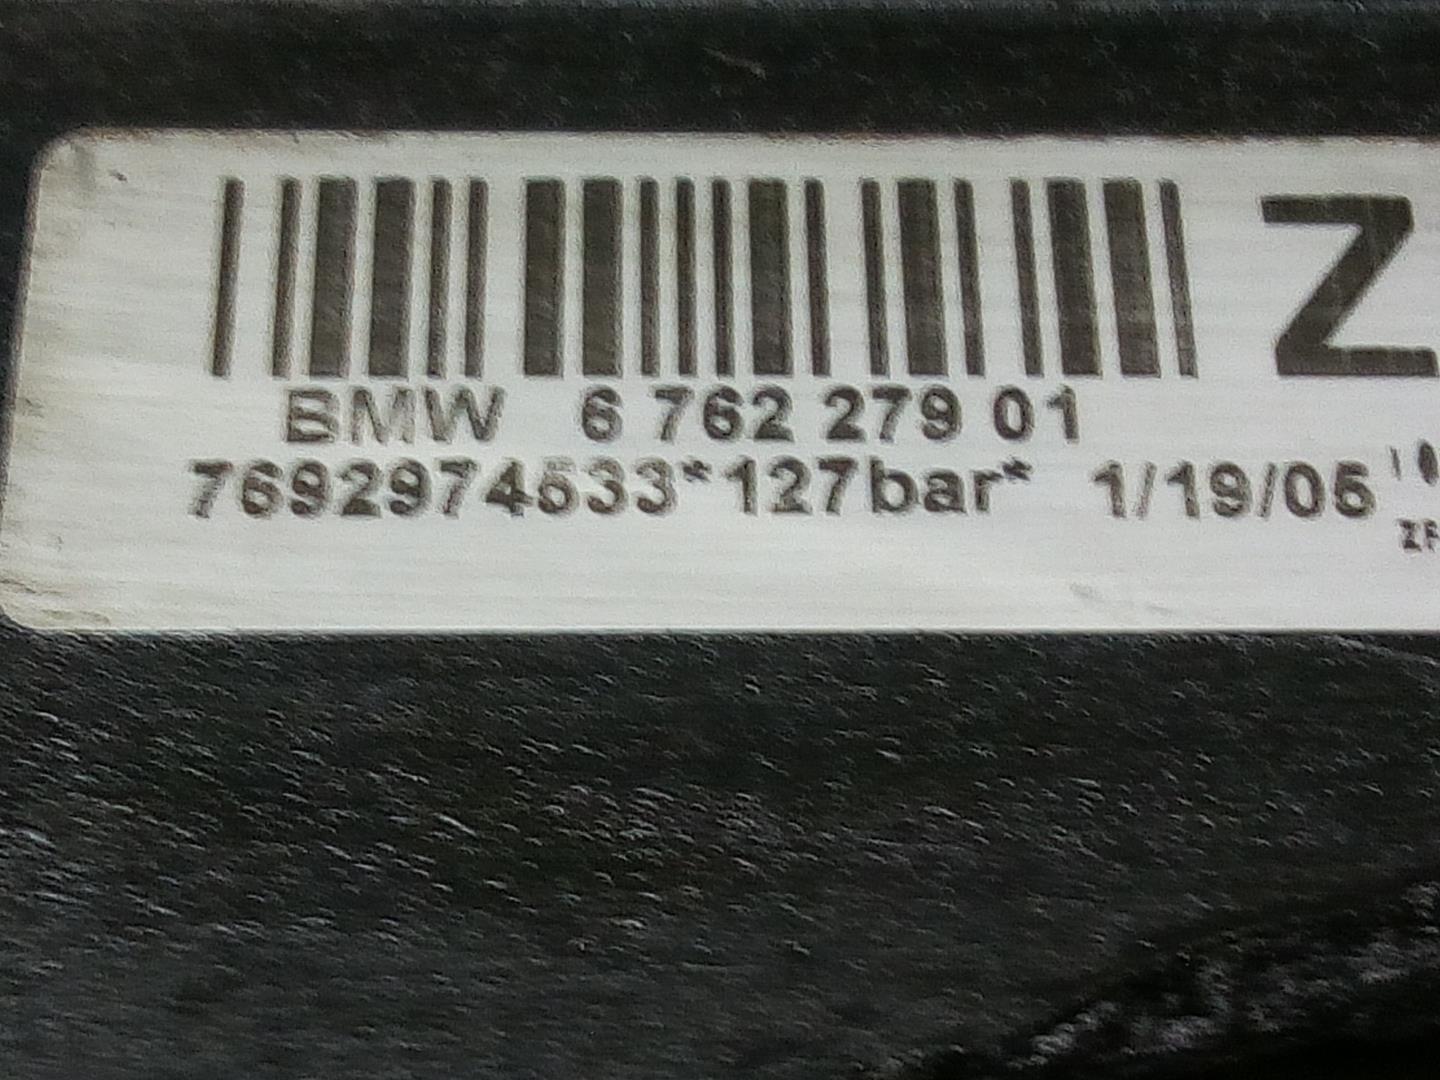 BMW X5 E53 (1999-2006) Насос гидроусилителя 676227901, 7692974533 18581789